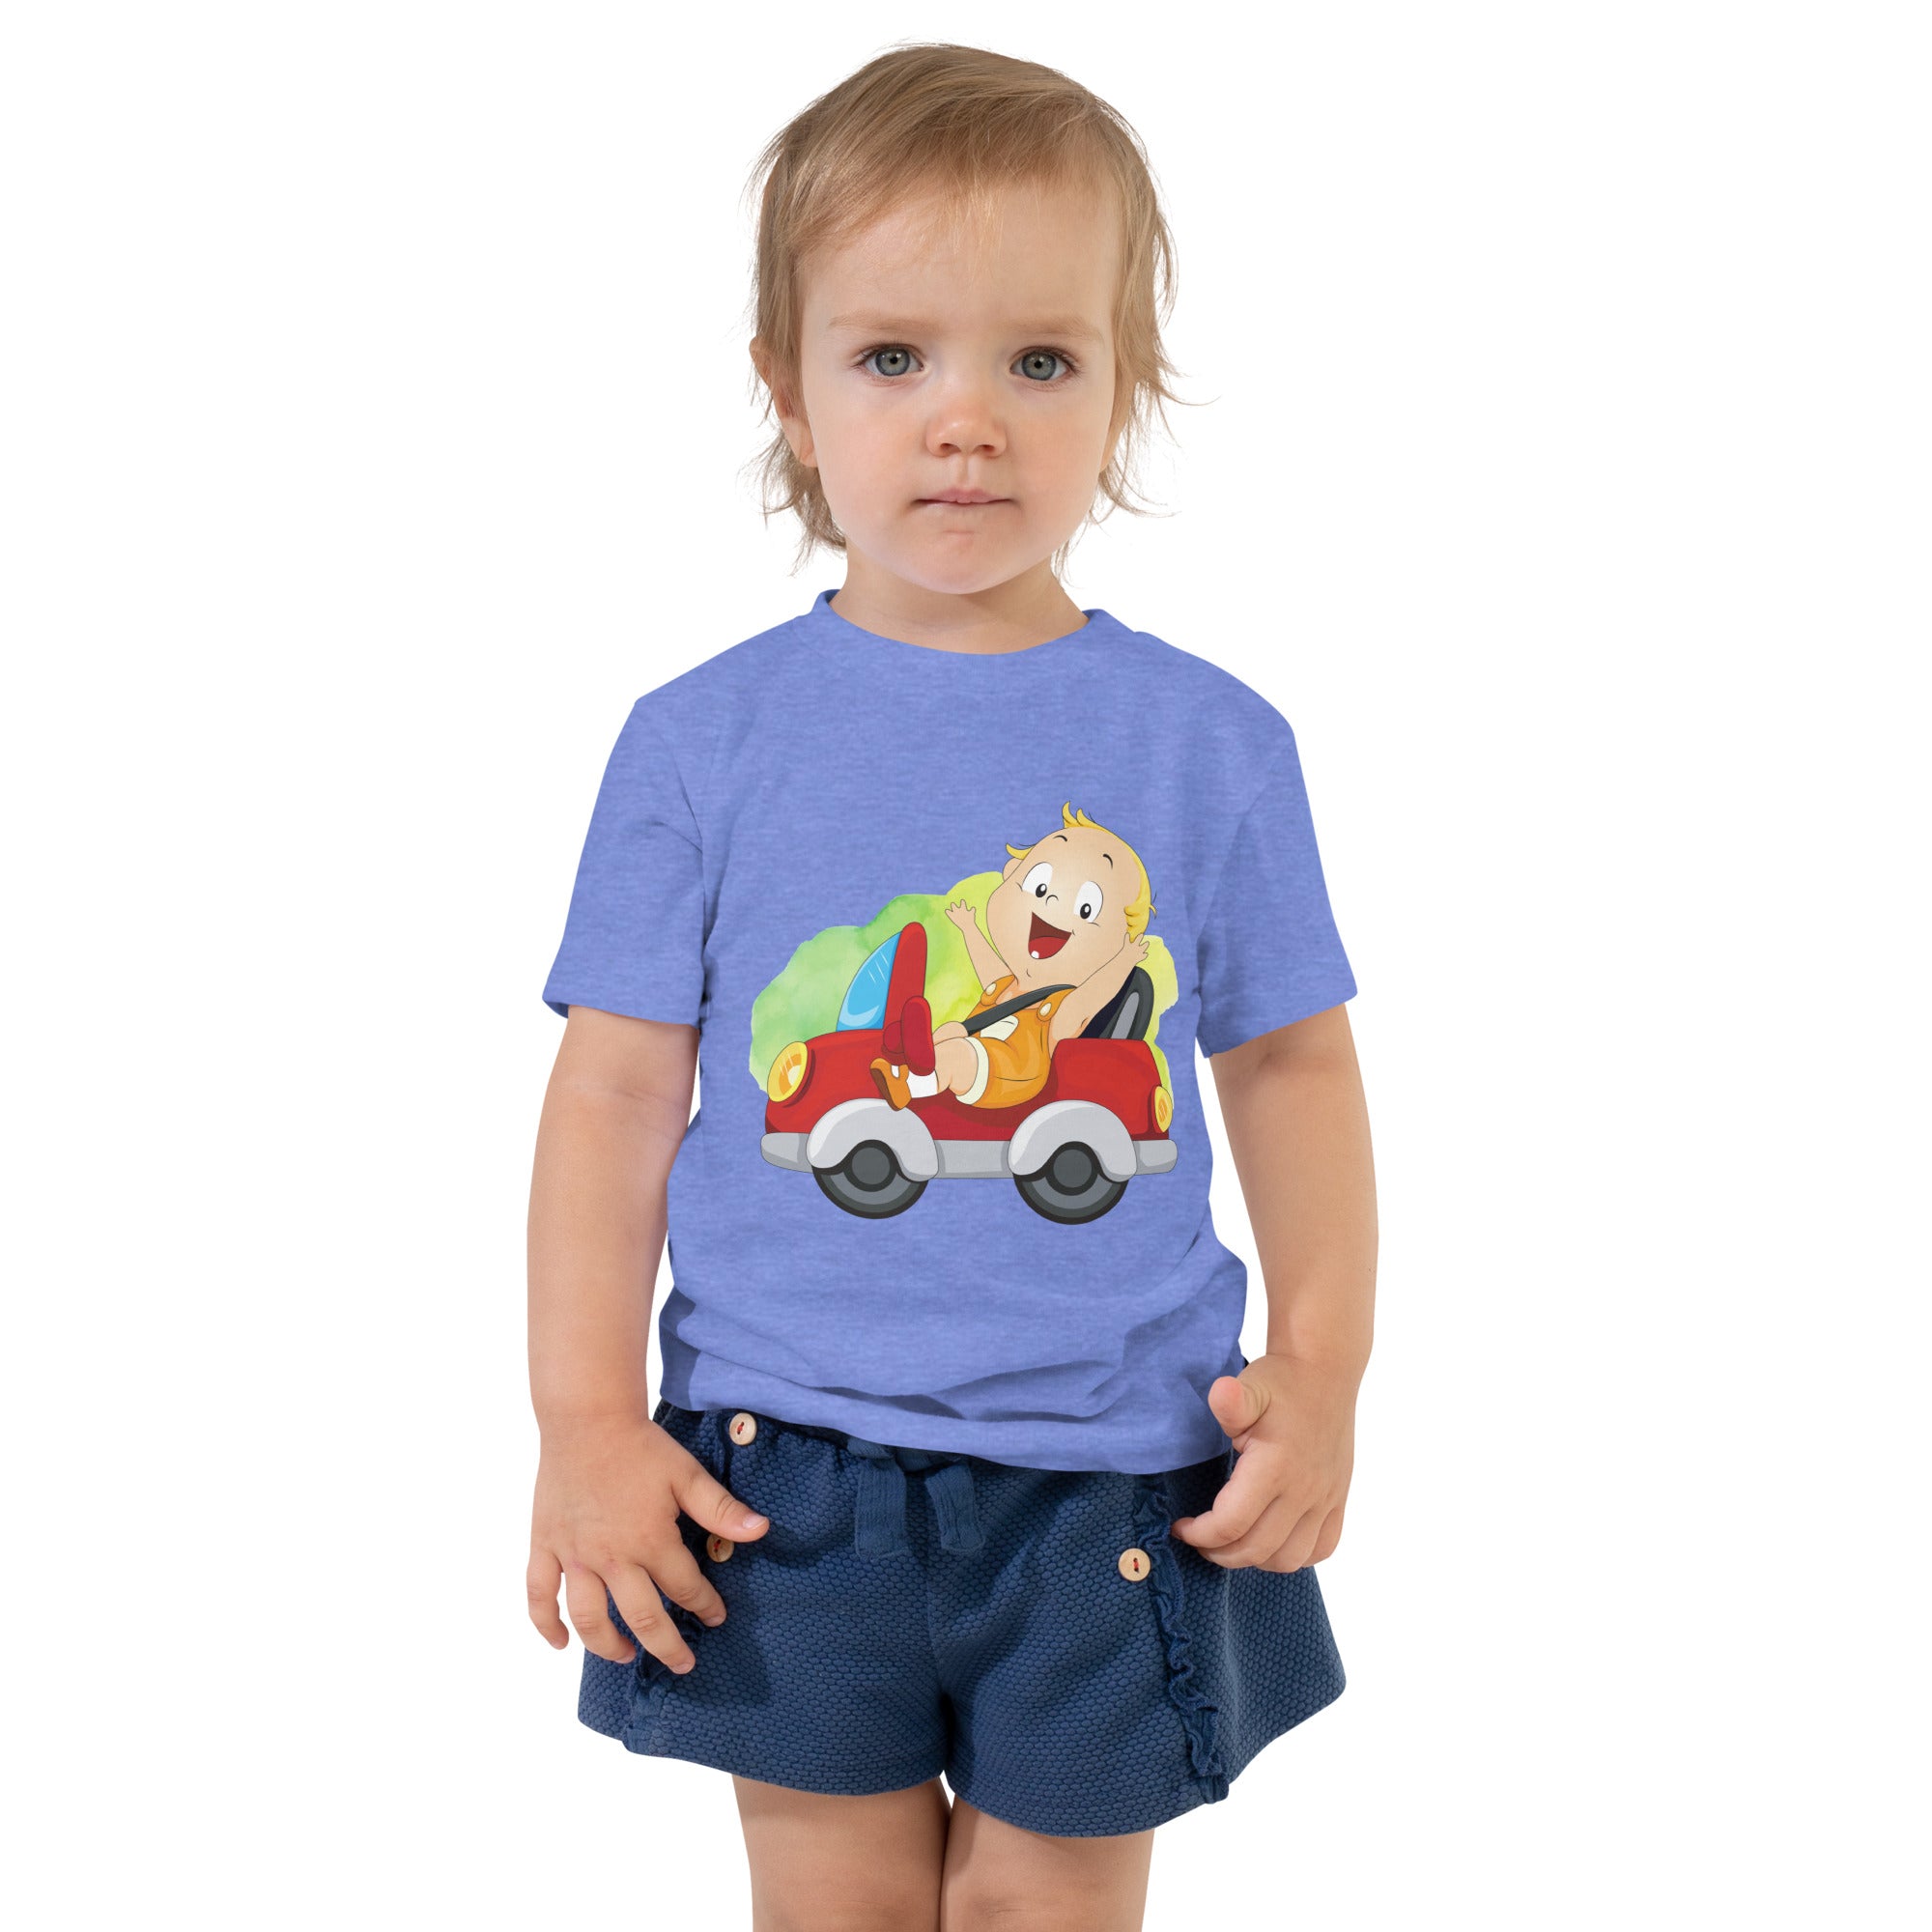 Toddler Short Sleeve Tee - Vroom! (Colors)